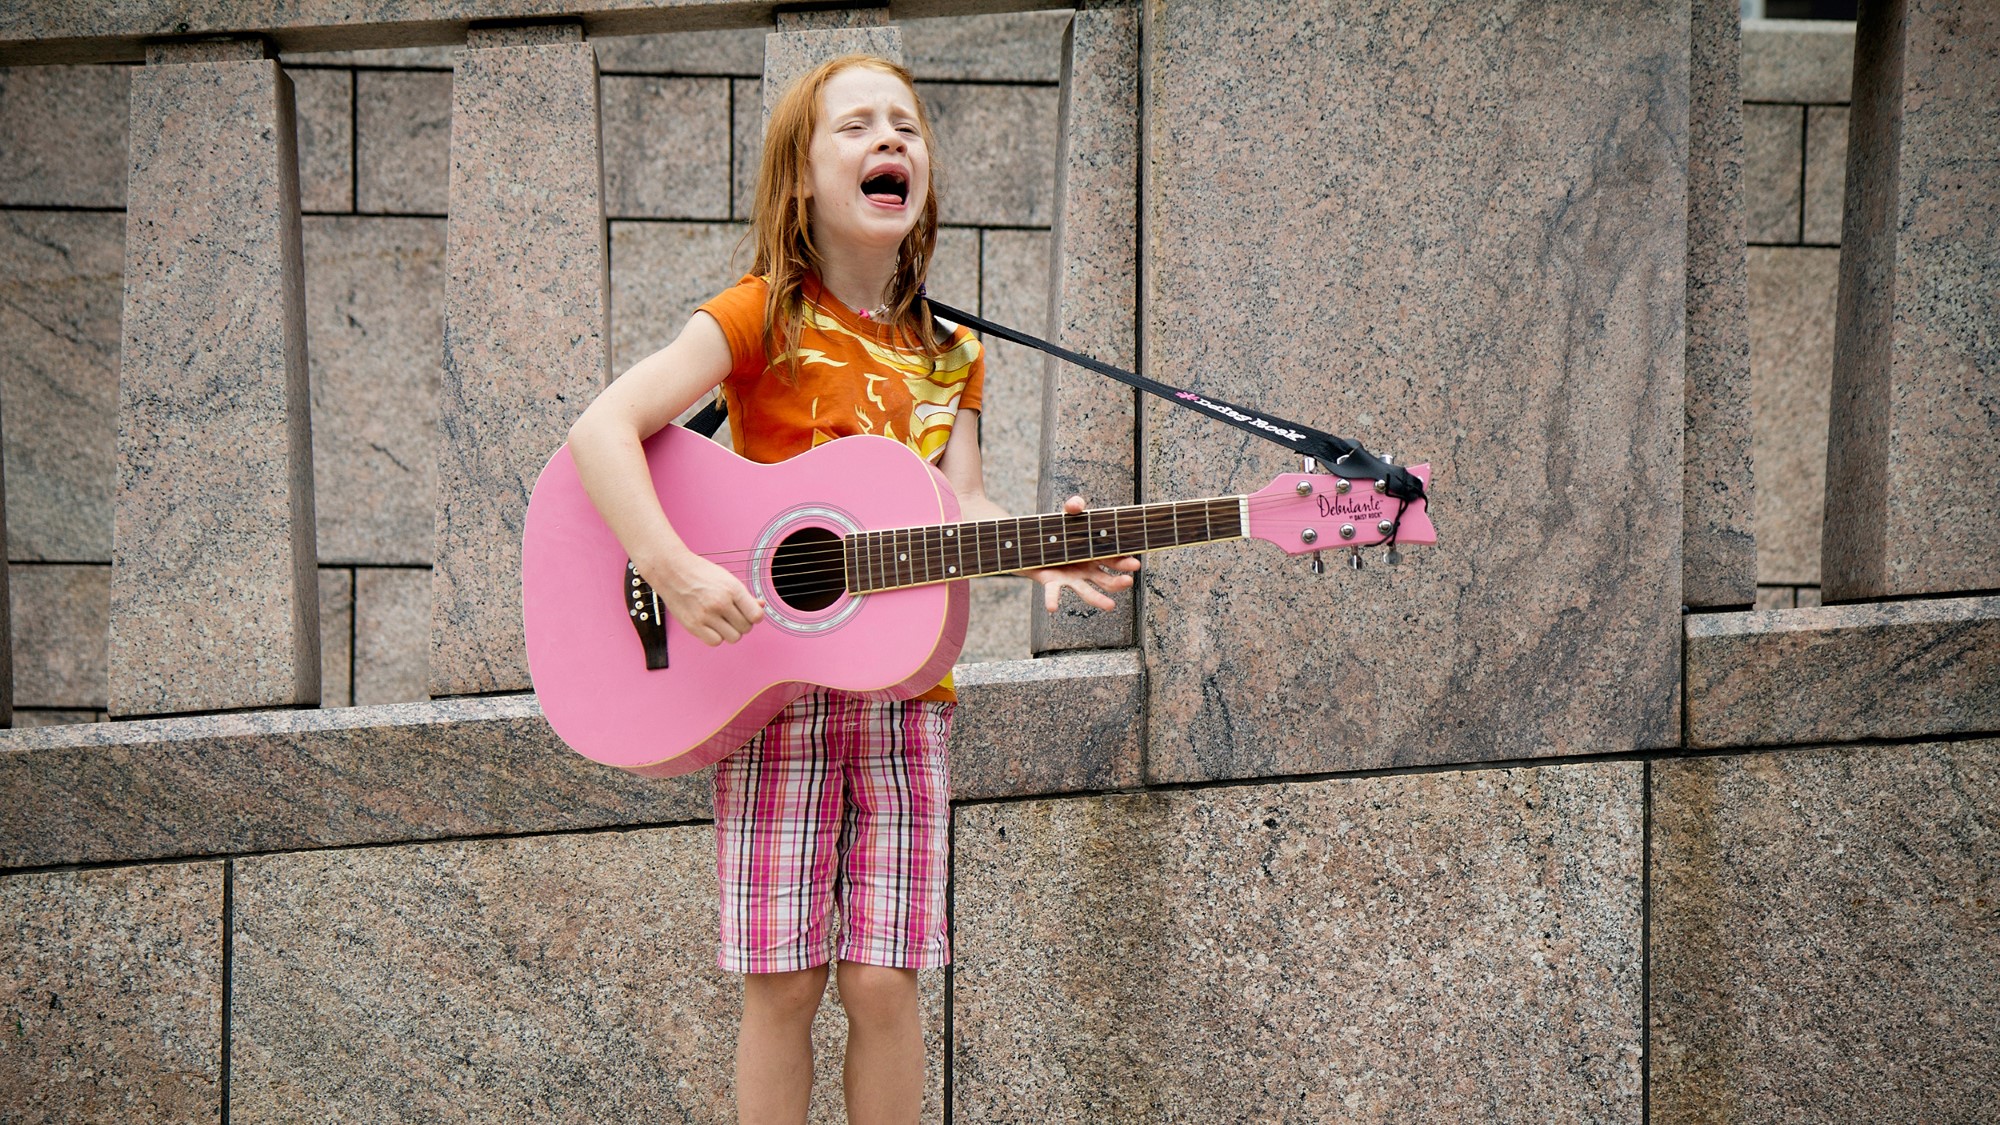 Jente med rosa gitar synger inderlig